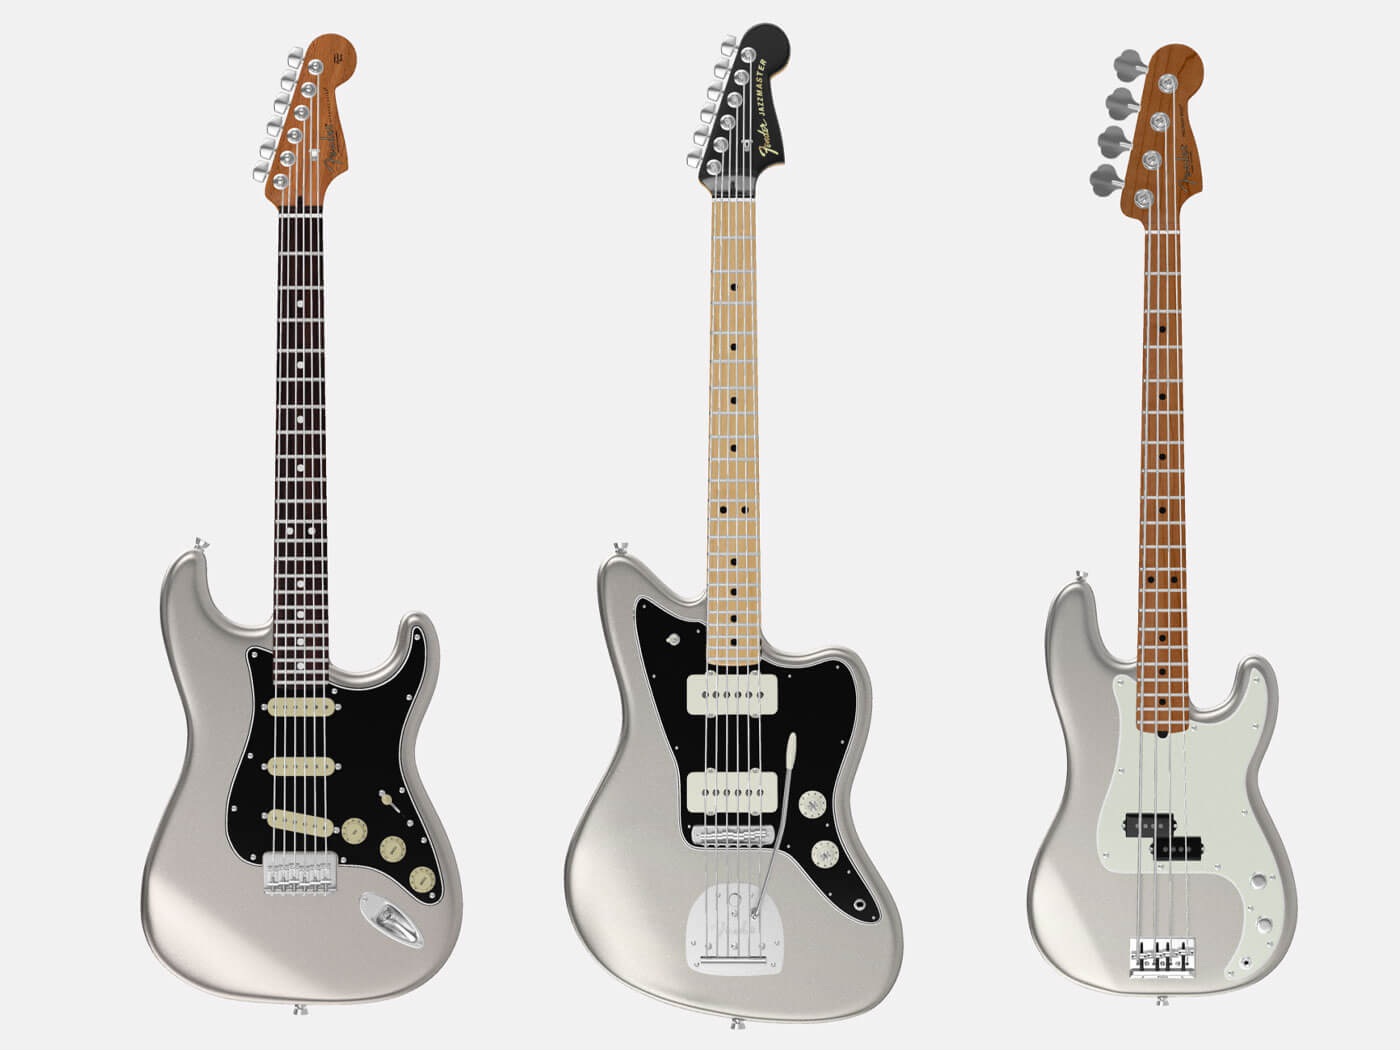 The Fender Mod Shop's new options